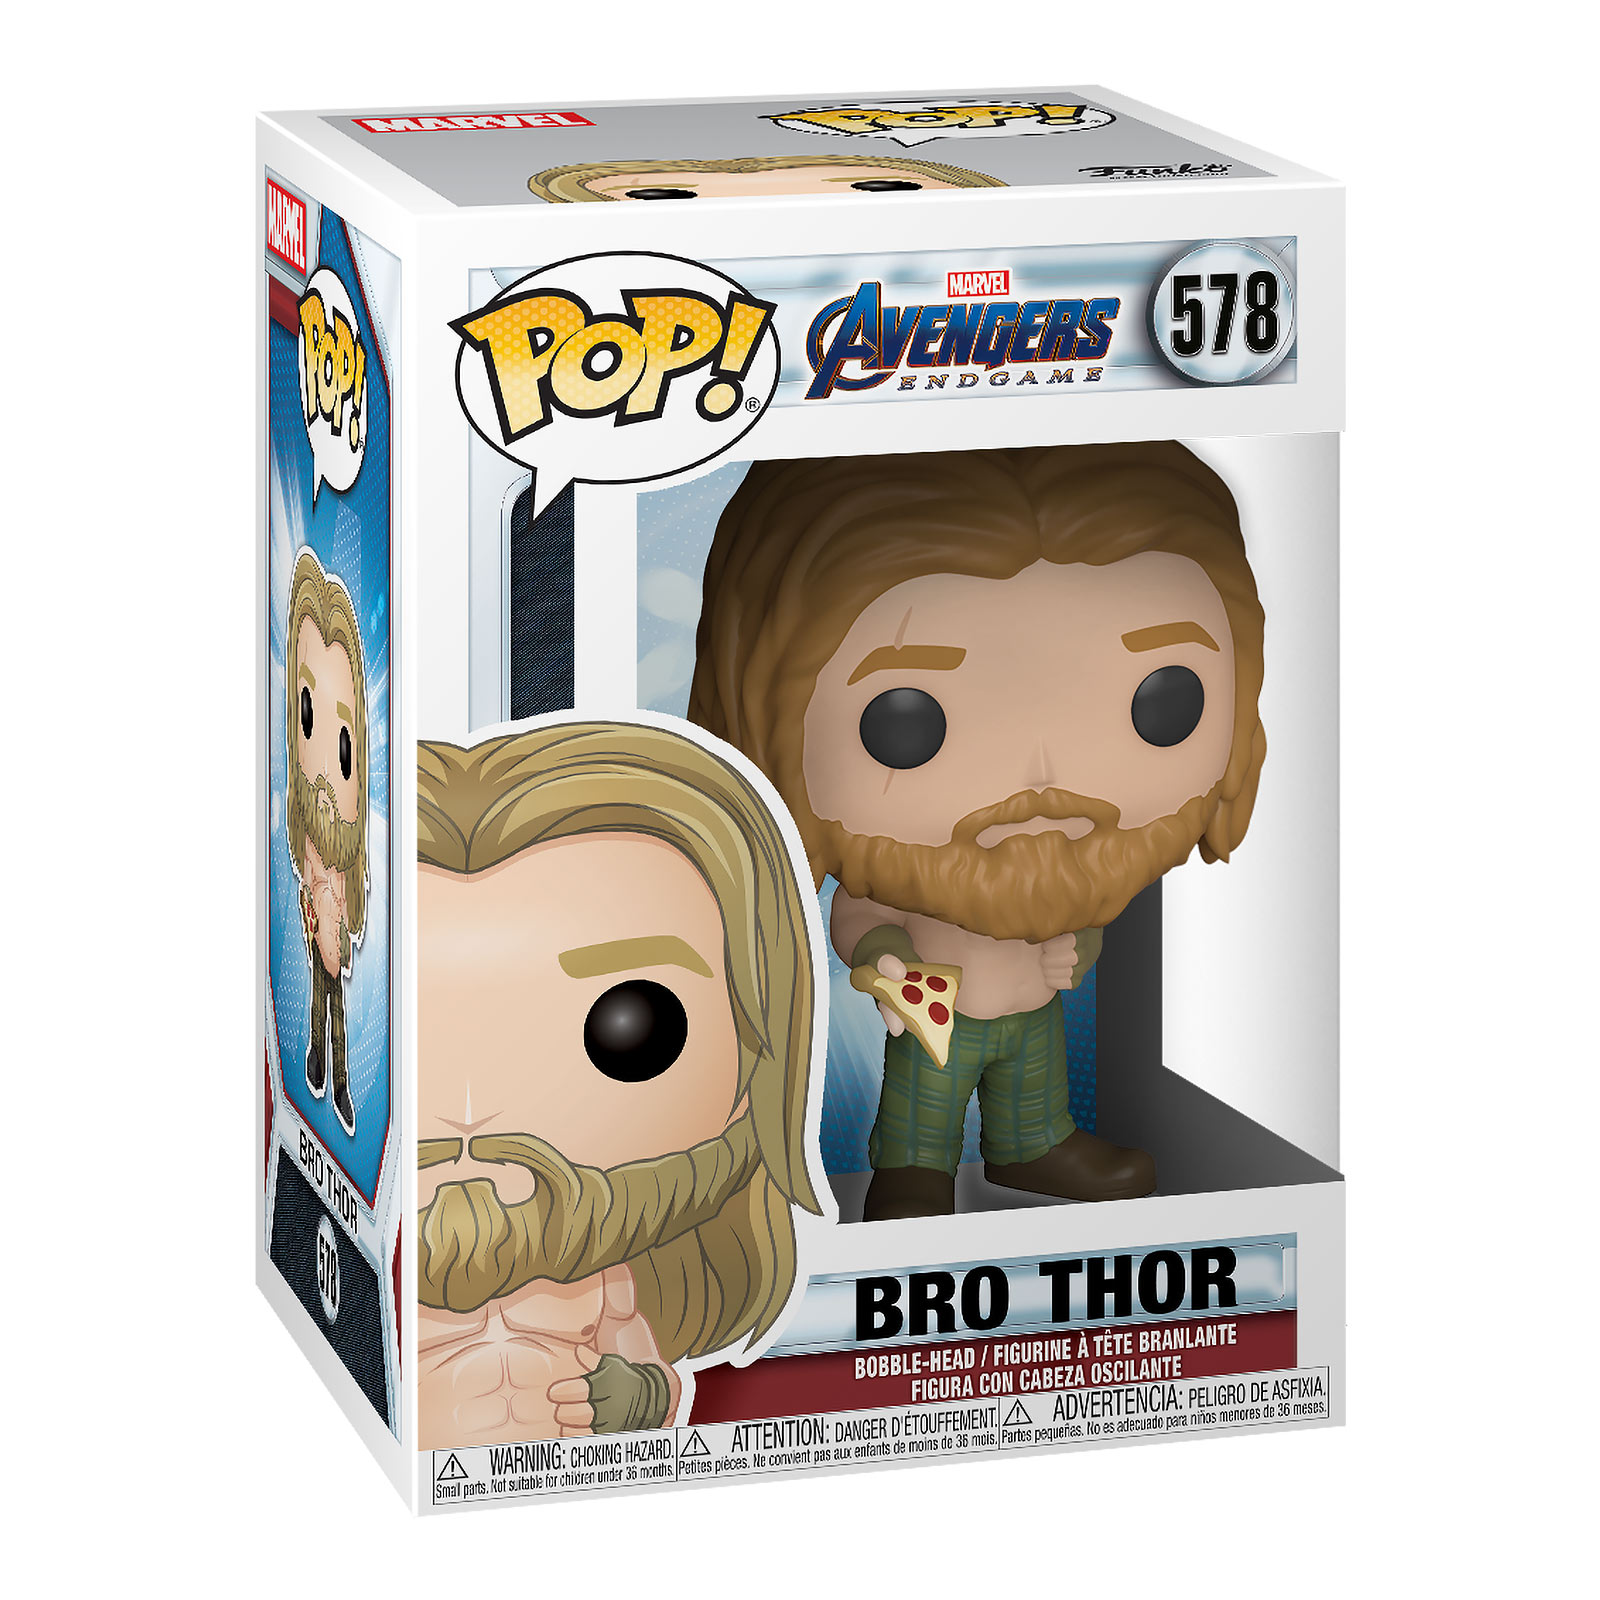 Avengers - Bro Thor met Pizza Endgame Funko Pop Bobblehead Figuur